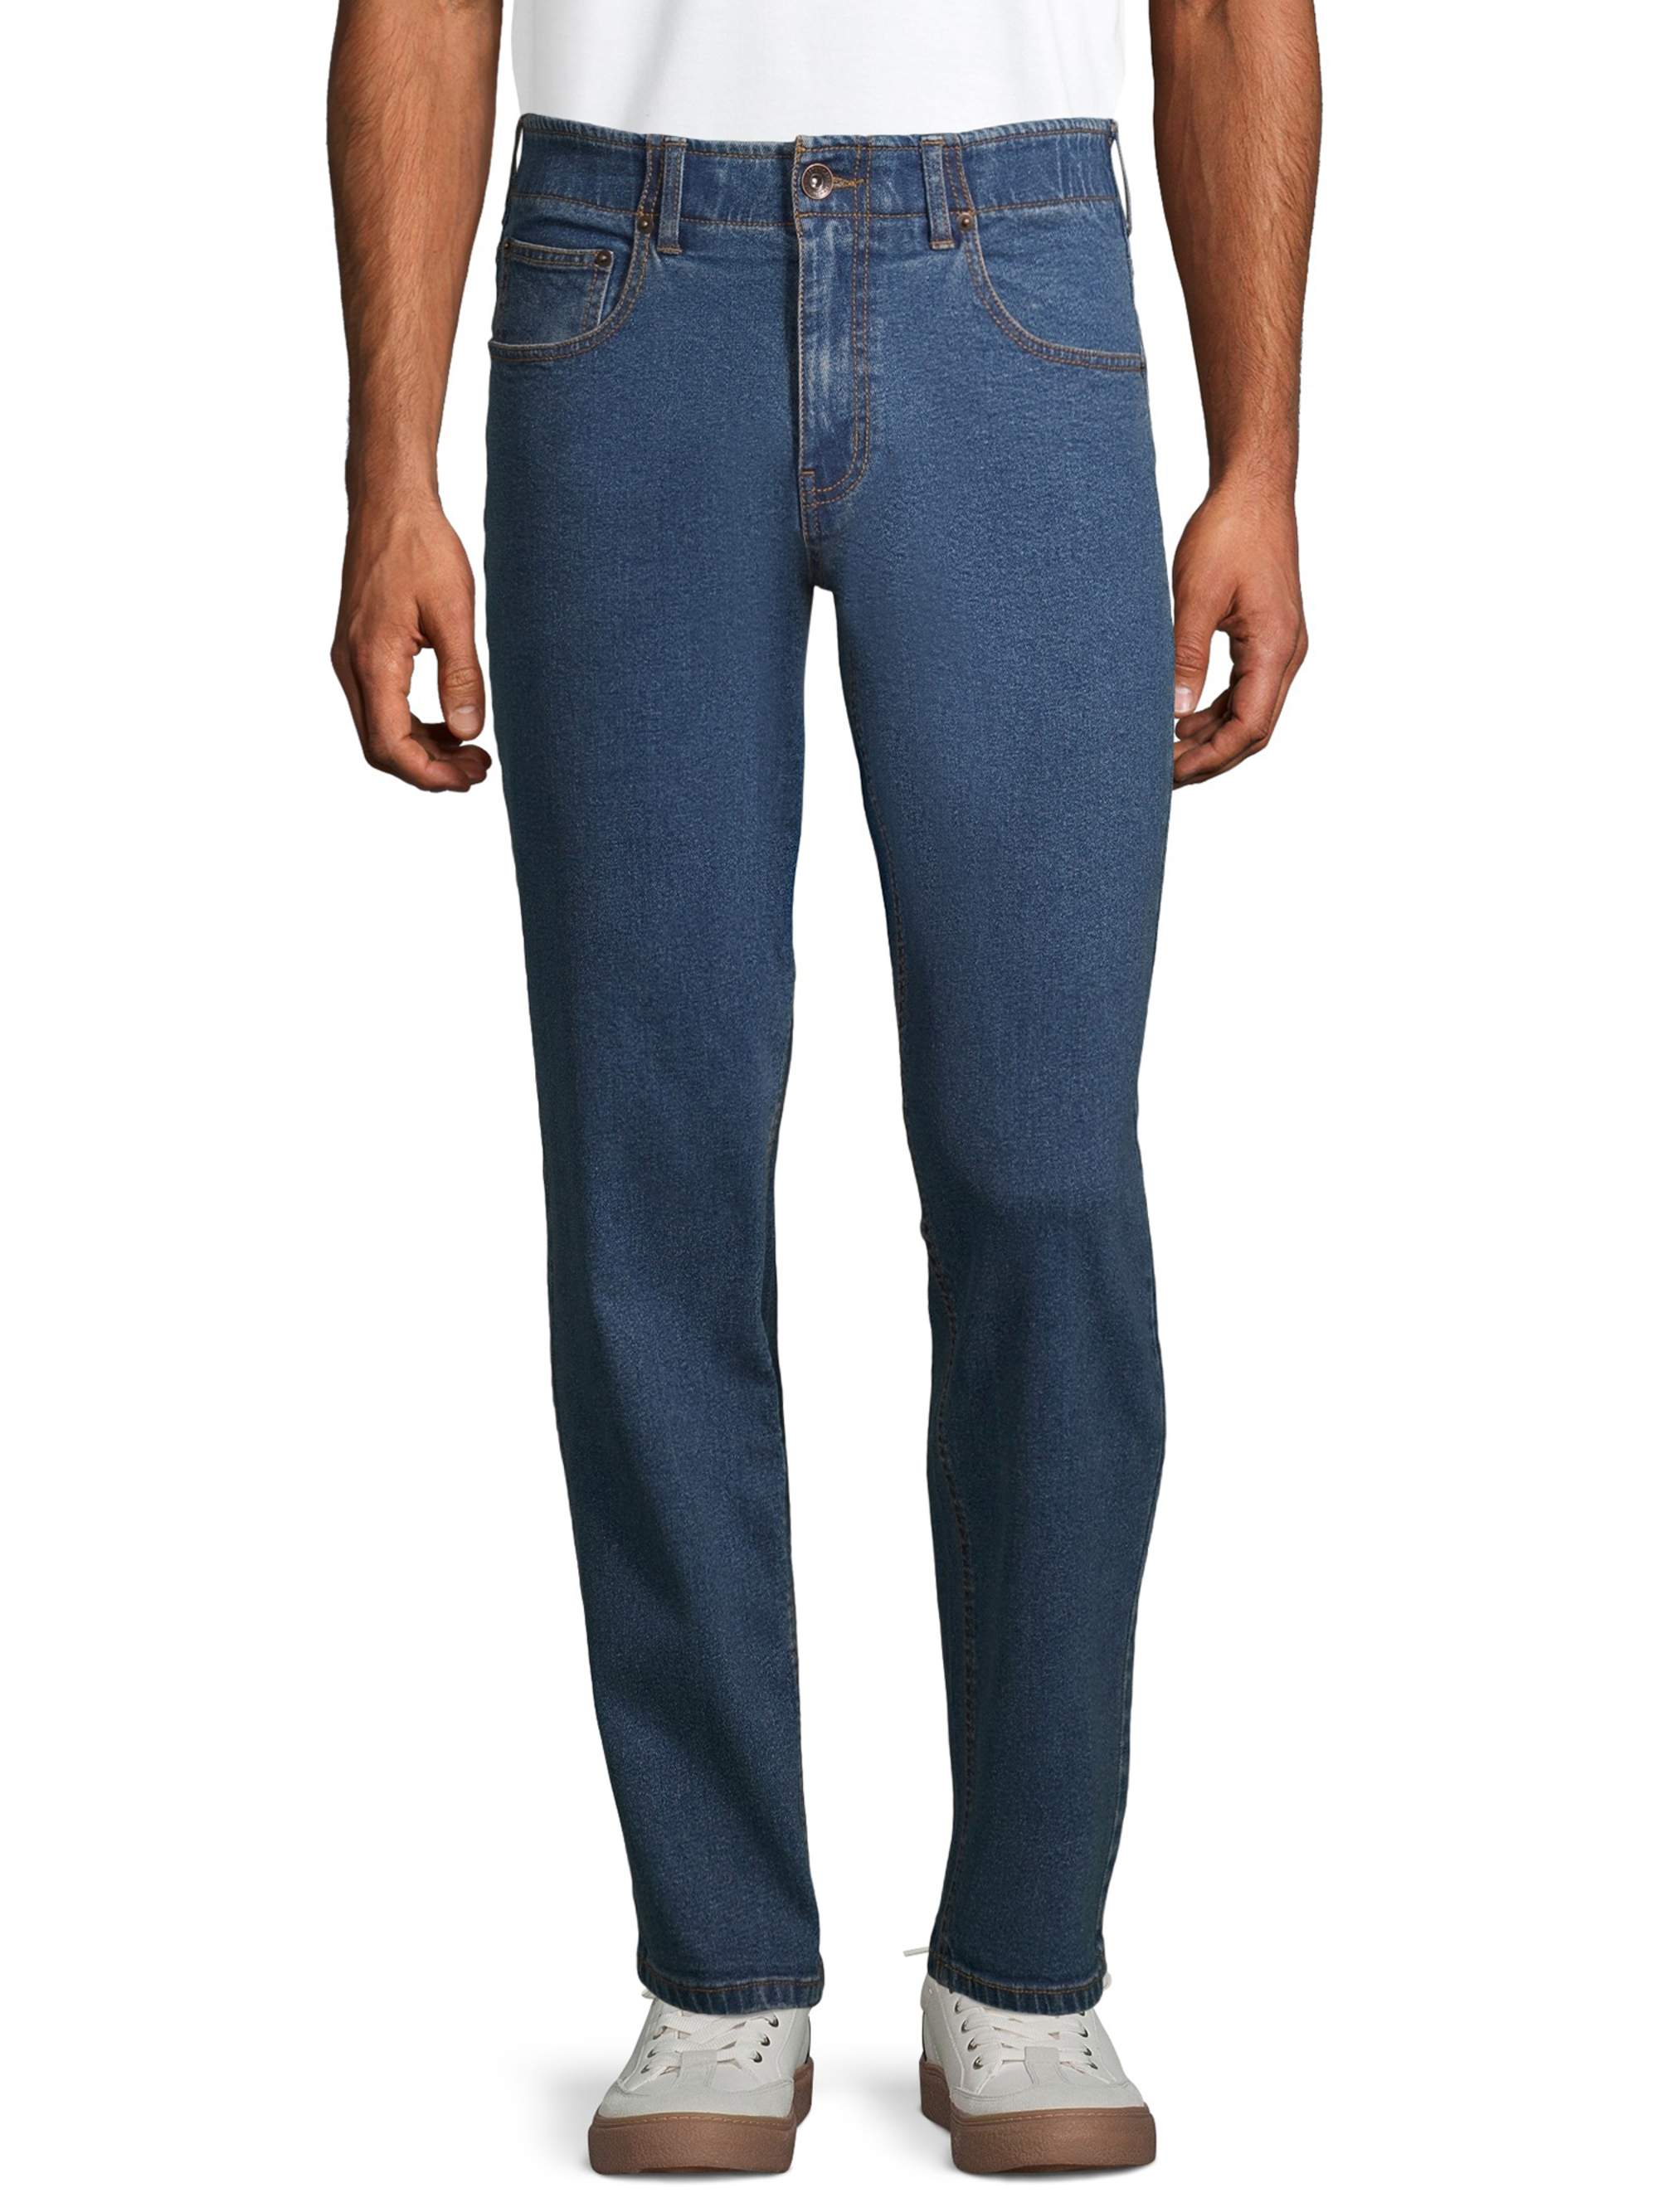 Hollywood Jeans Men's Active Flex Denim Straight Fit Jeans - image 1 of 6